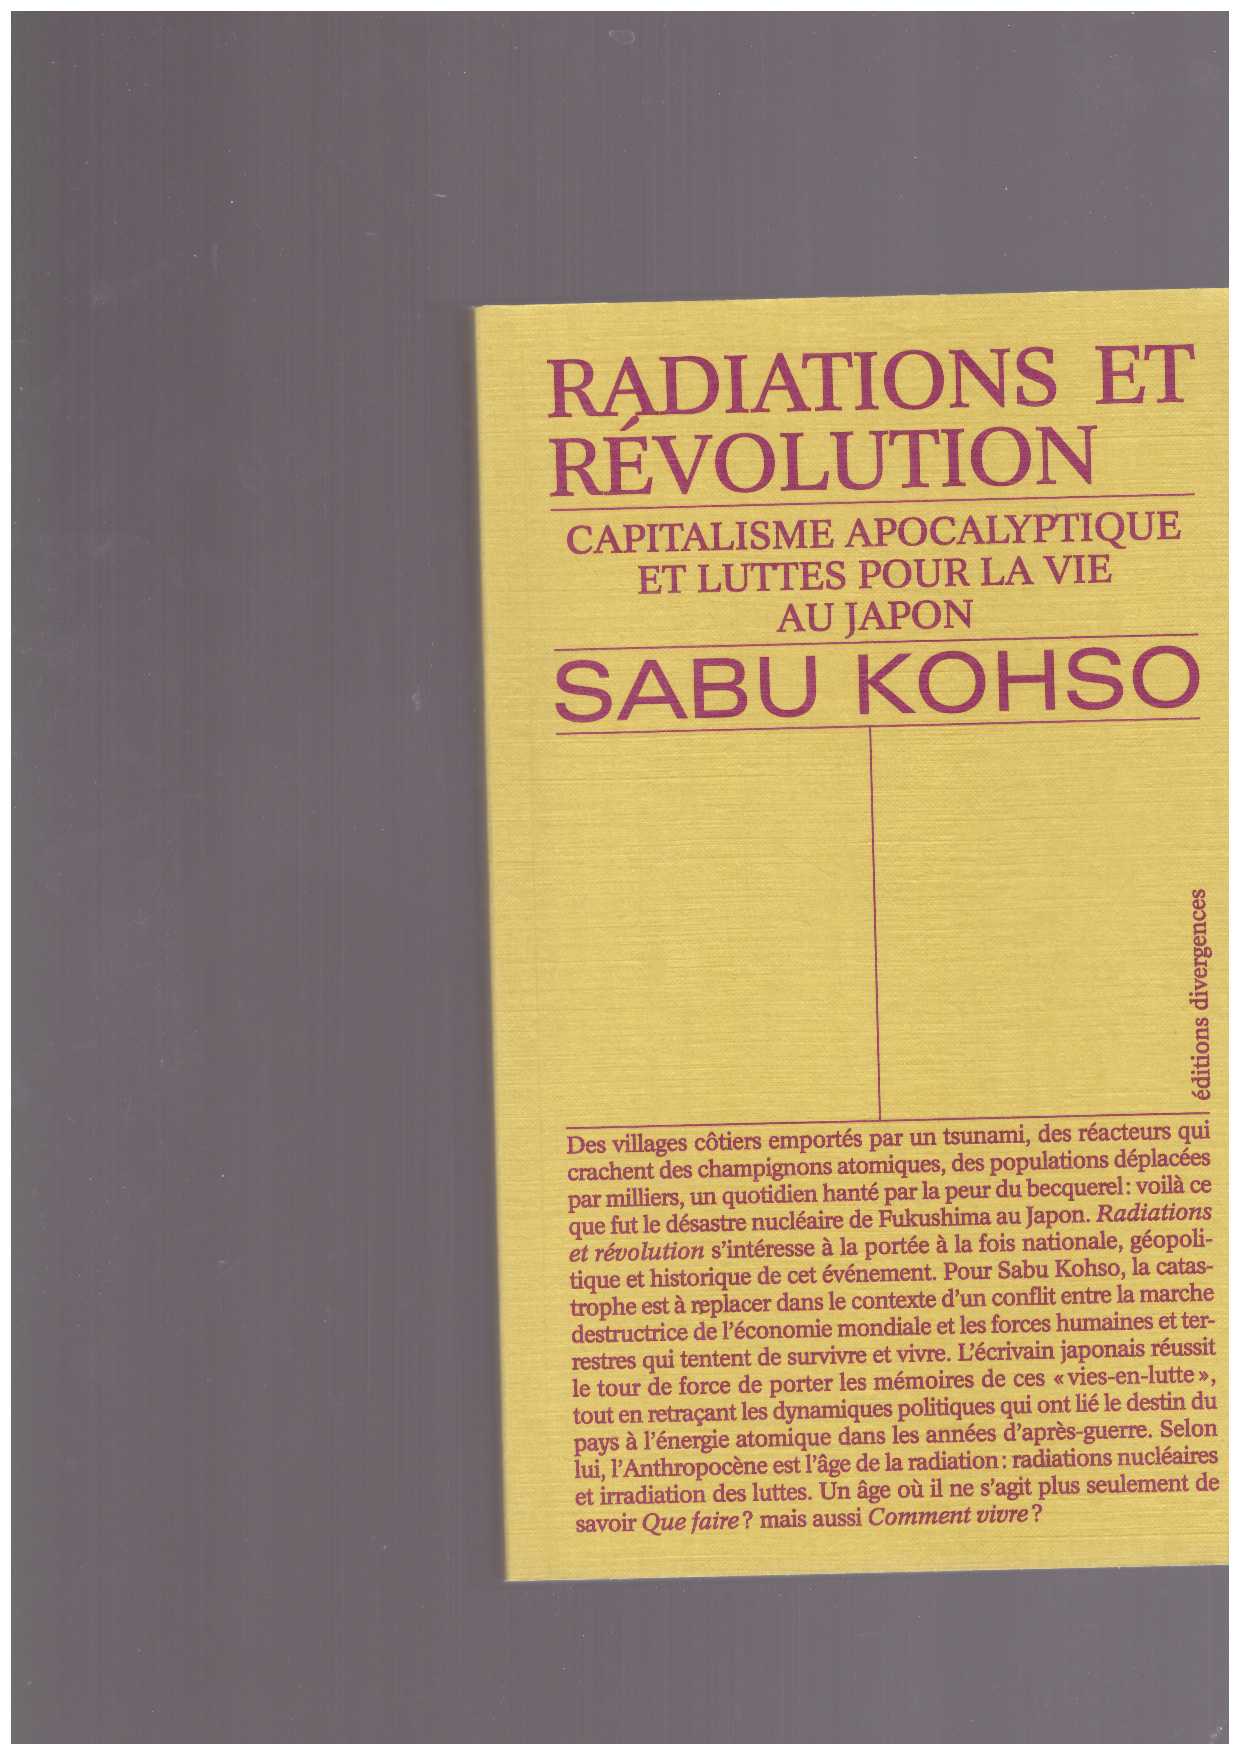 KOHSO, Sabu - Radiations et révolution